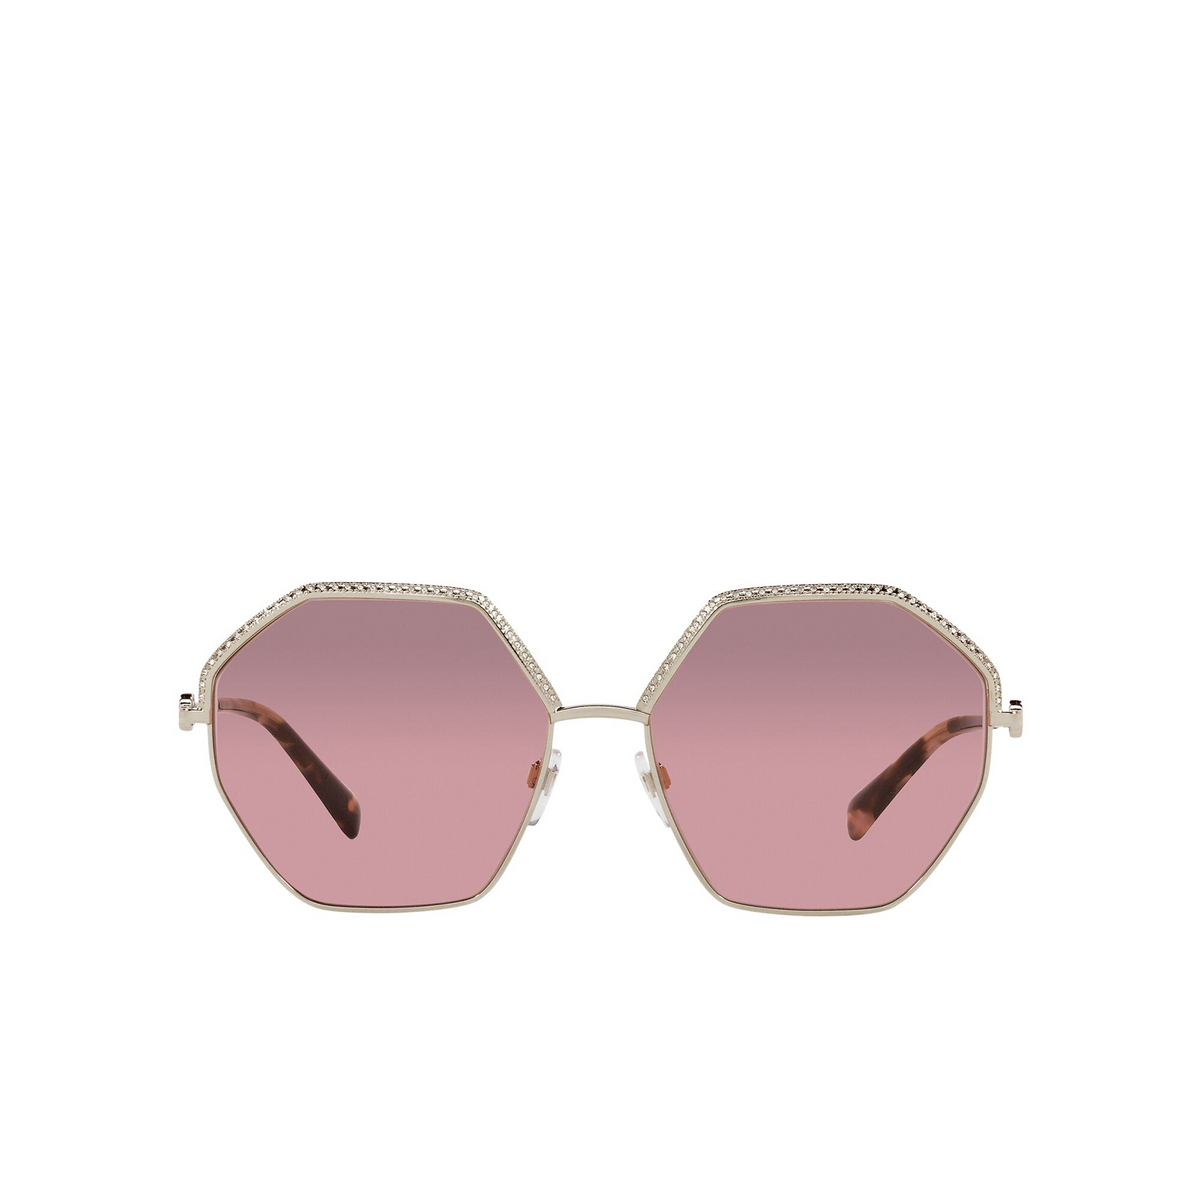 Valentino® Irregular Sunglasses: VA2044 color Pale Gold 300384 - front view.